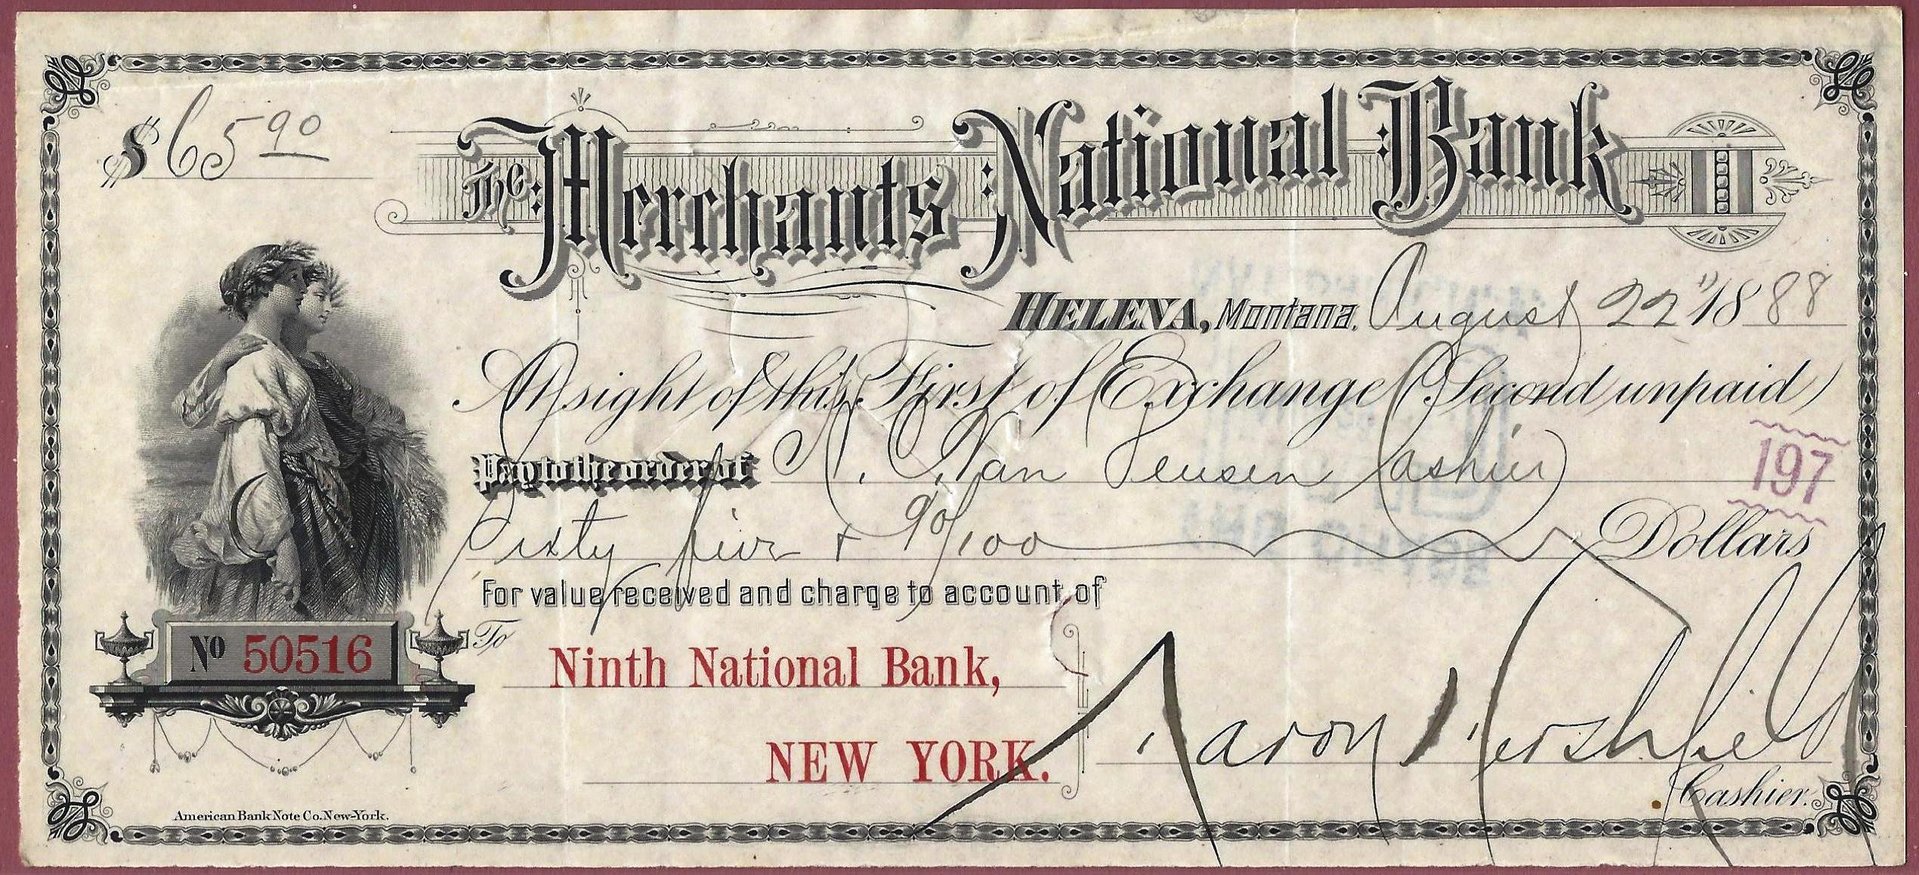 chk_MT_Helena_merchants-ntl-bank_1888_ABNCo-vignette_face.jpg